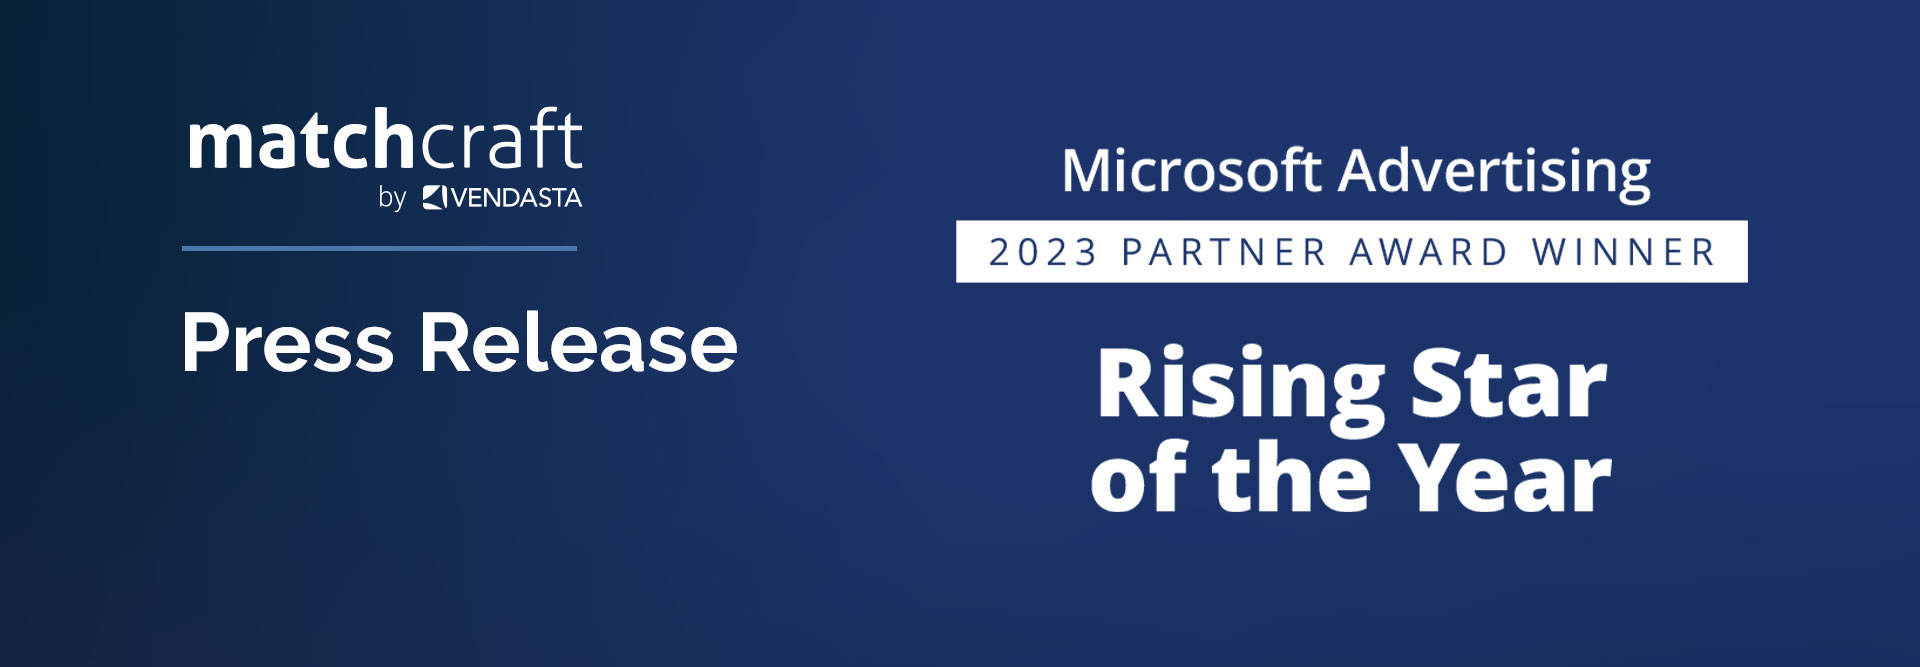 MatchCraft Wins Prestigious Microsoft Advertising Rising Star of the Year Award for 2023